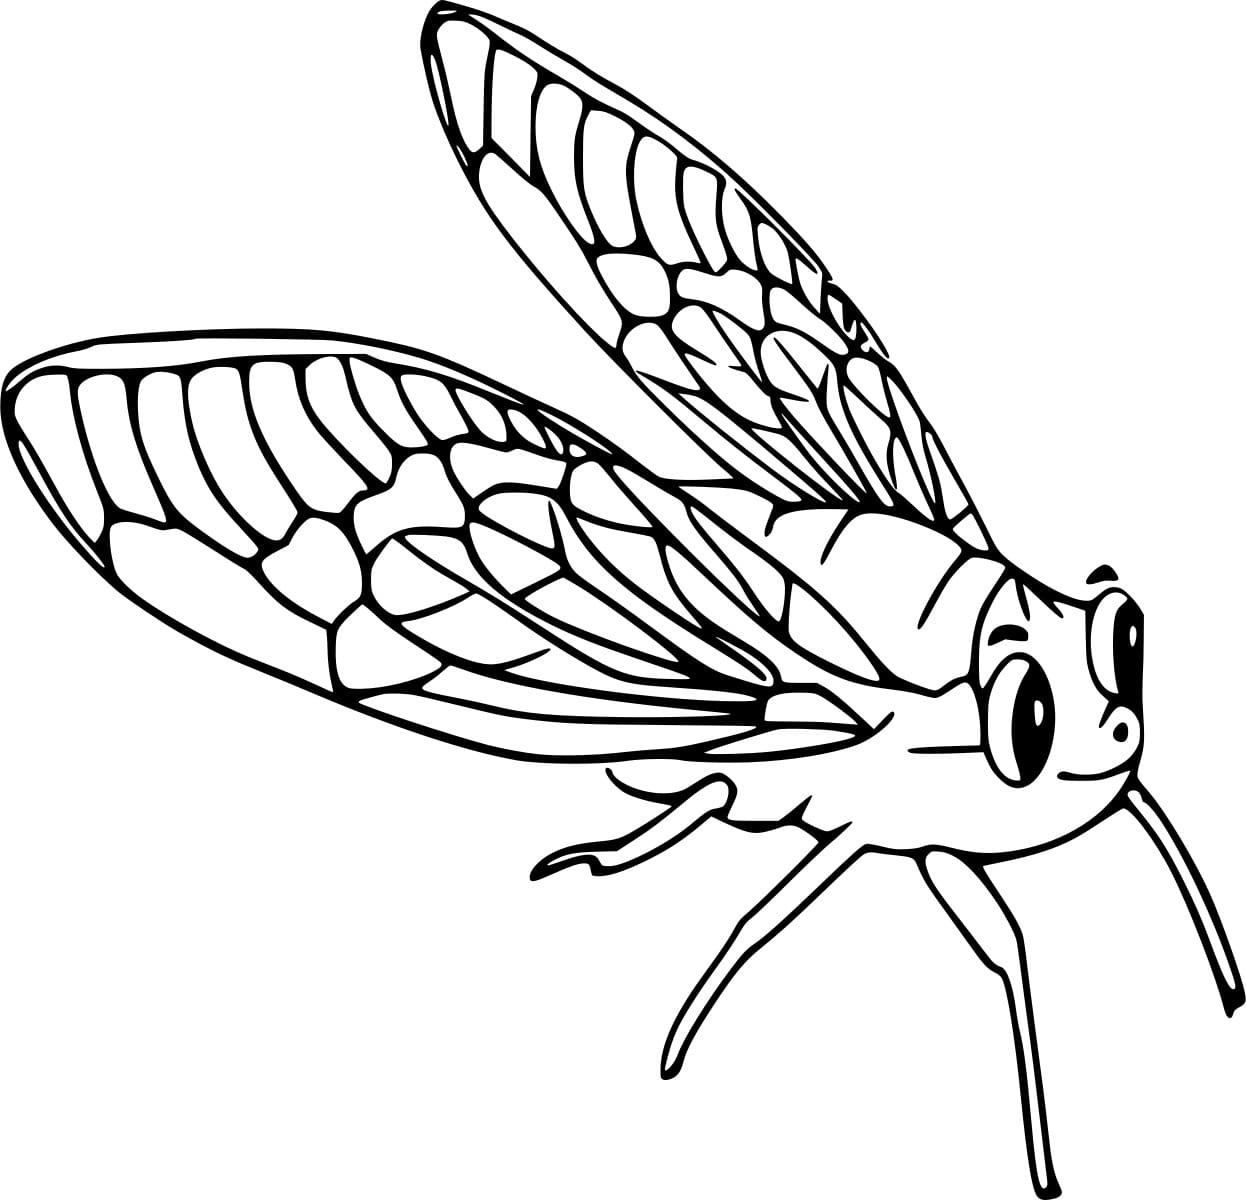 Cute Cicada Image